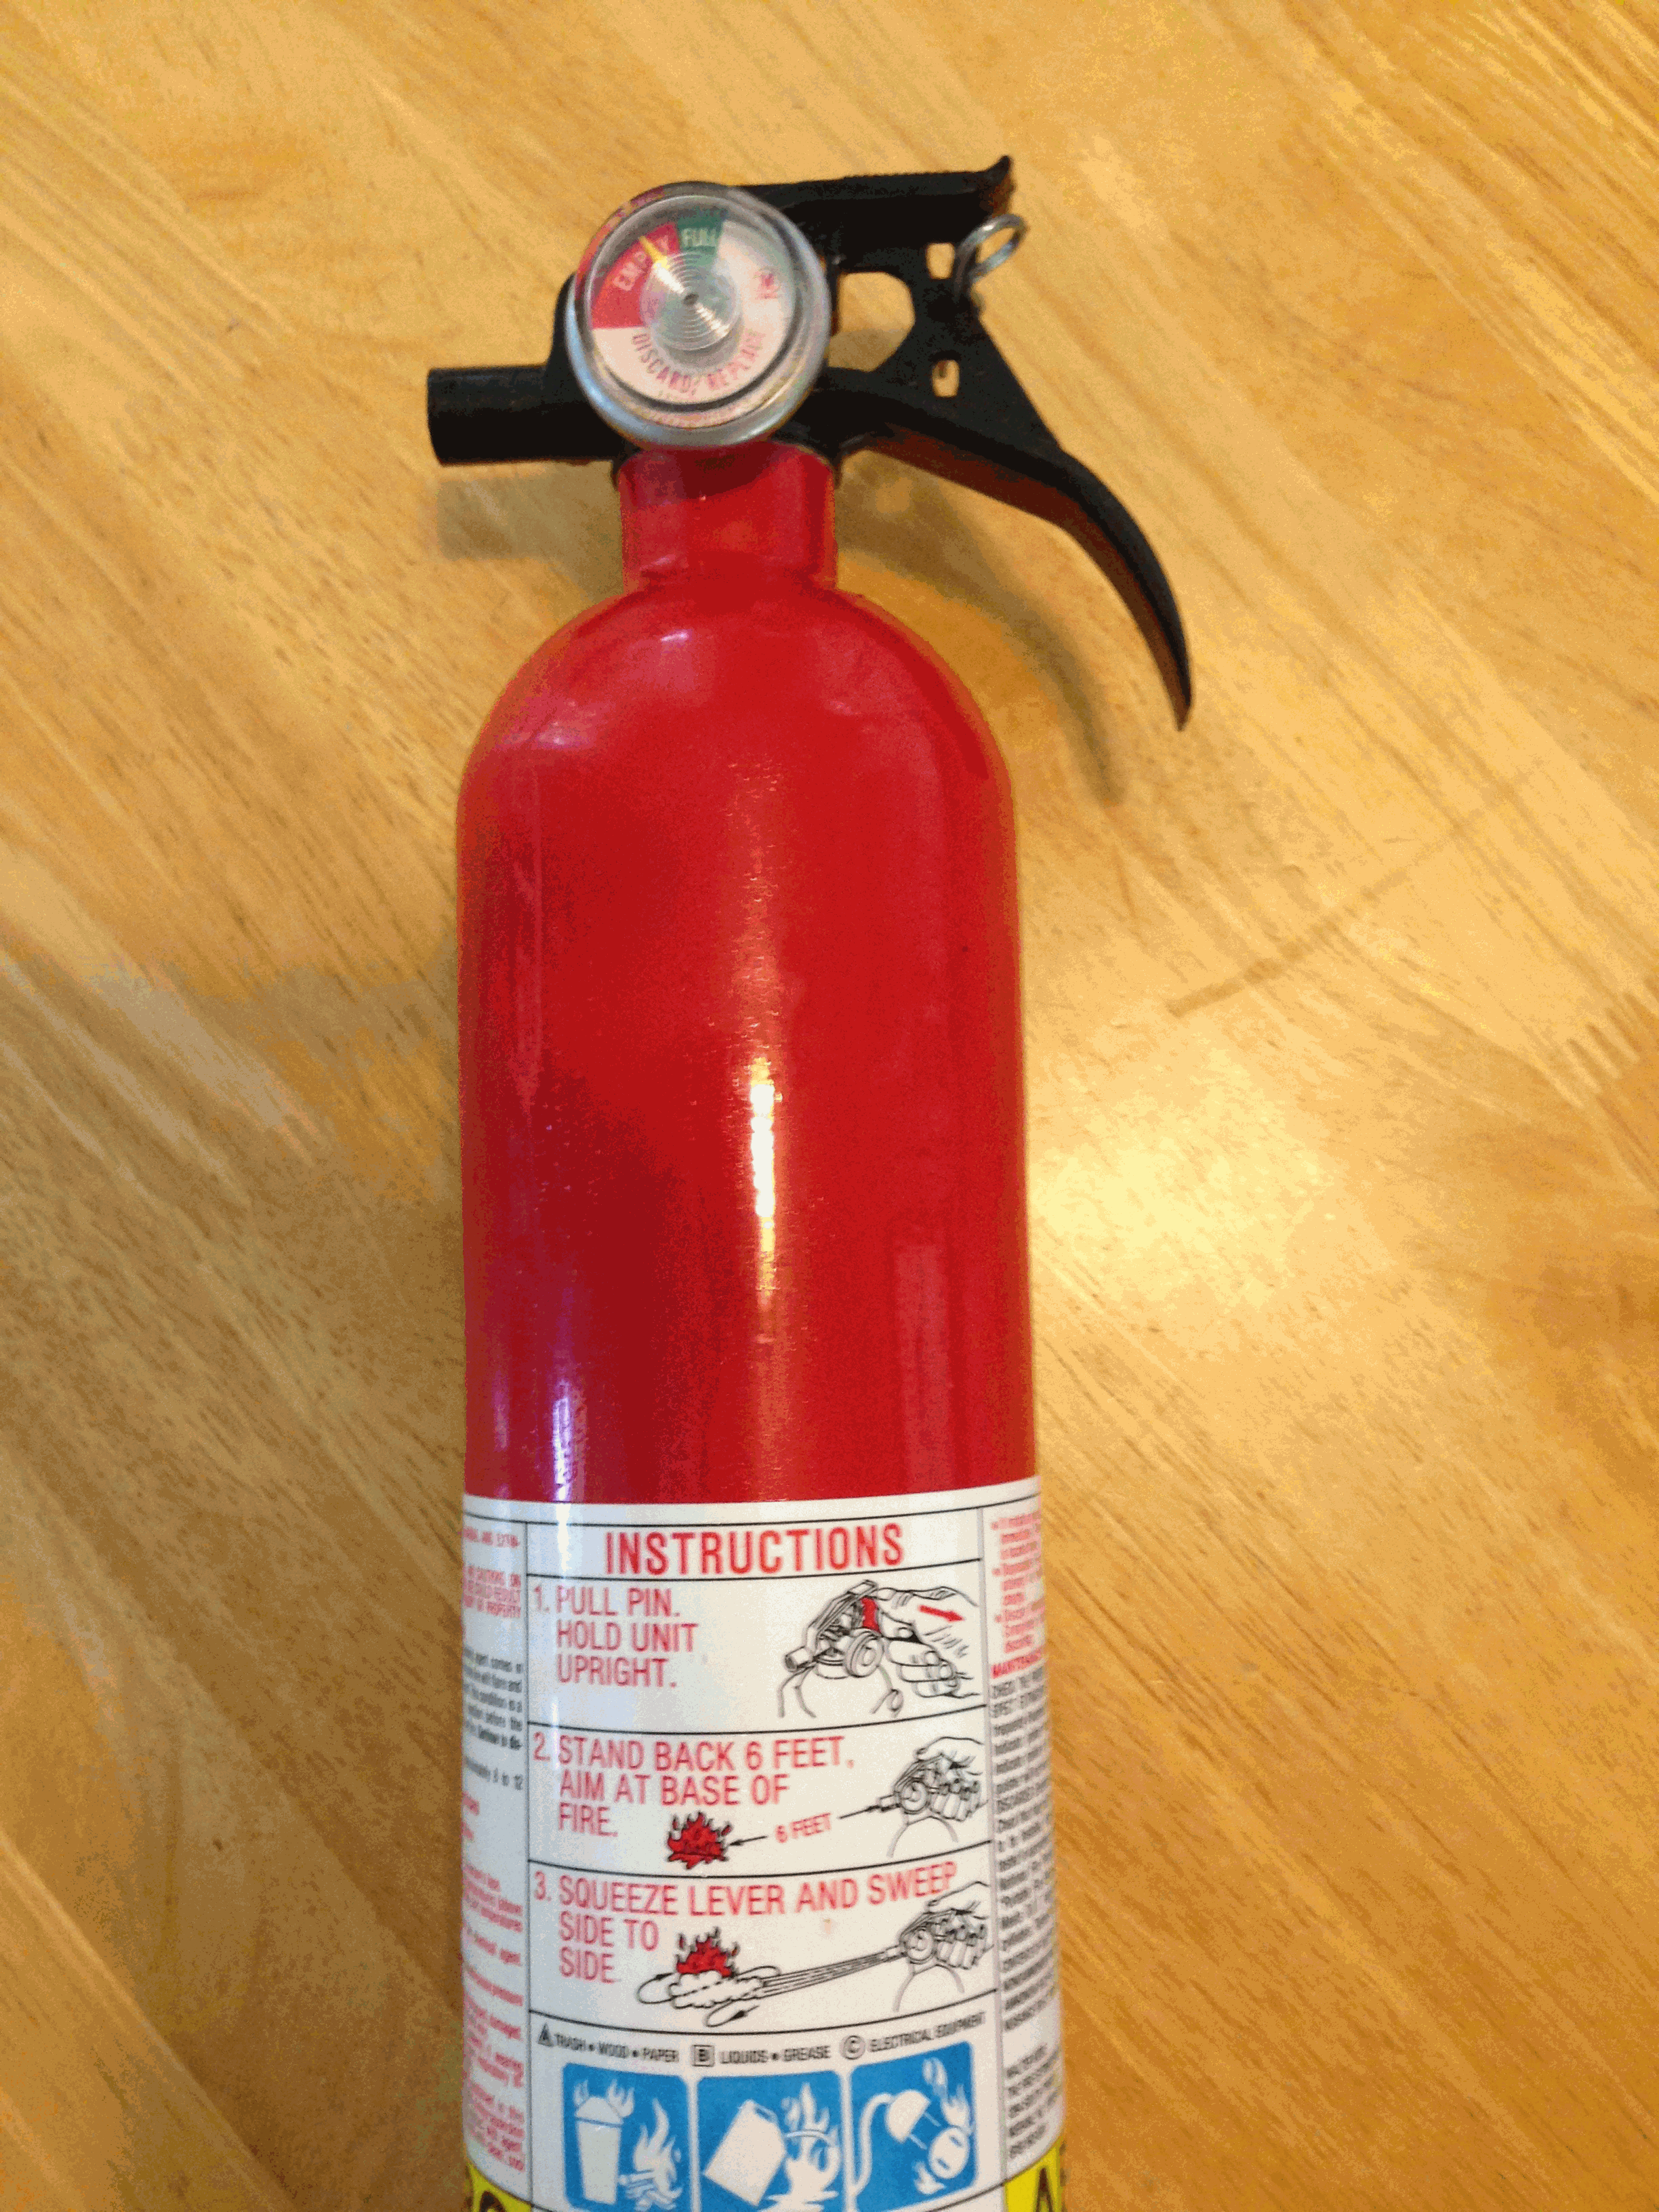 Home fire extinguisher. Photo: Debra Lordan.